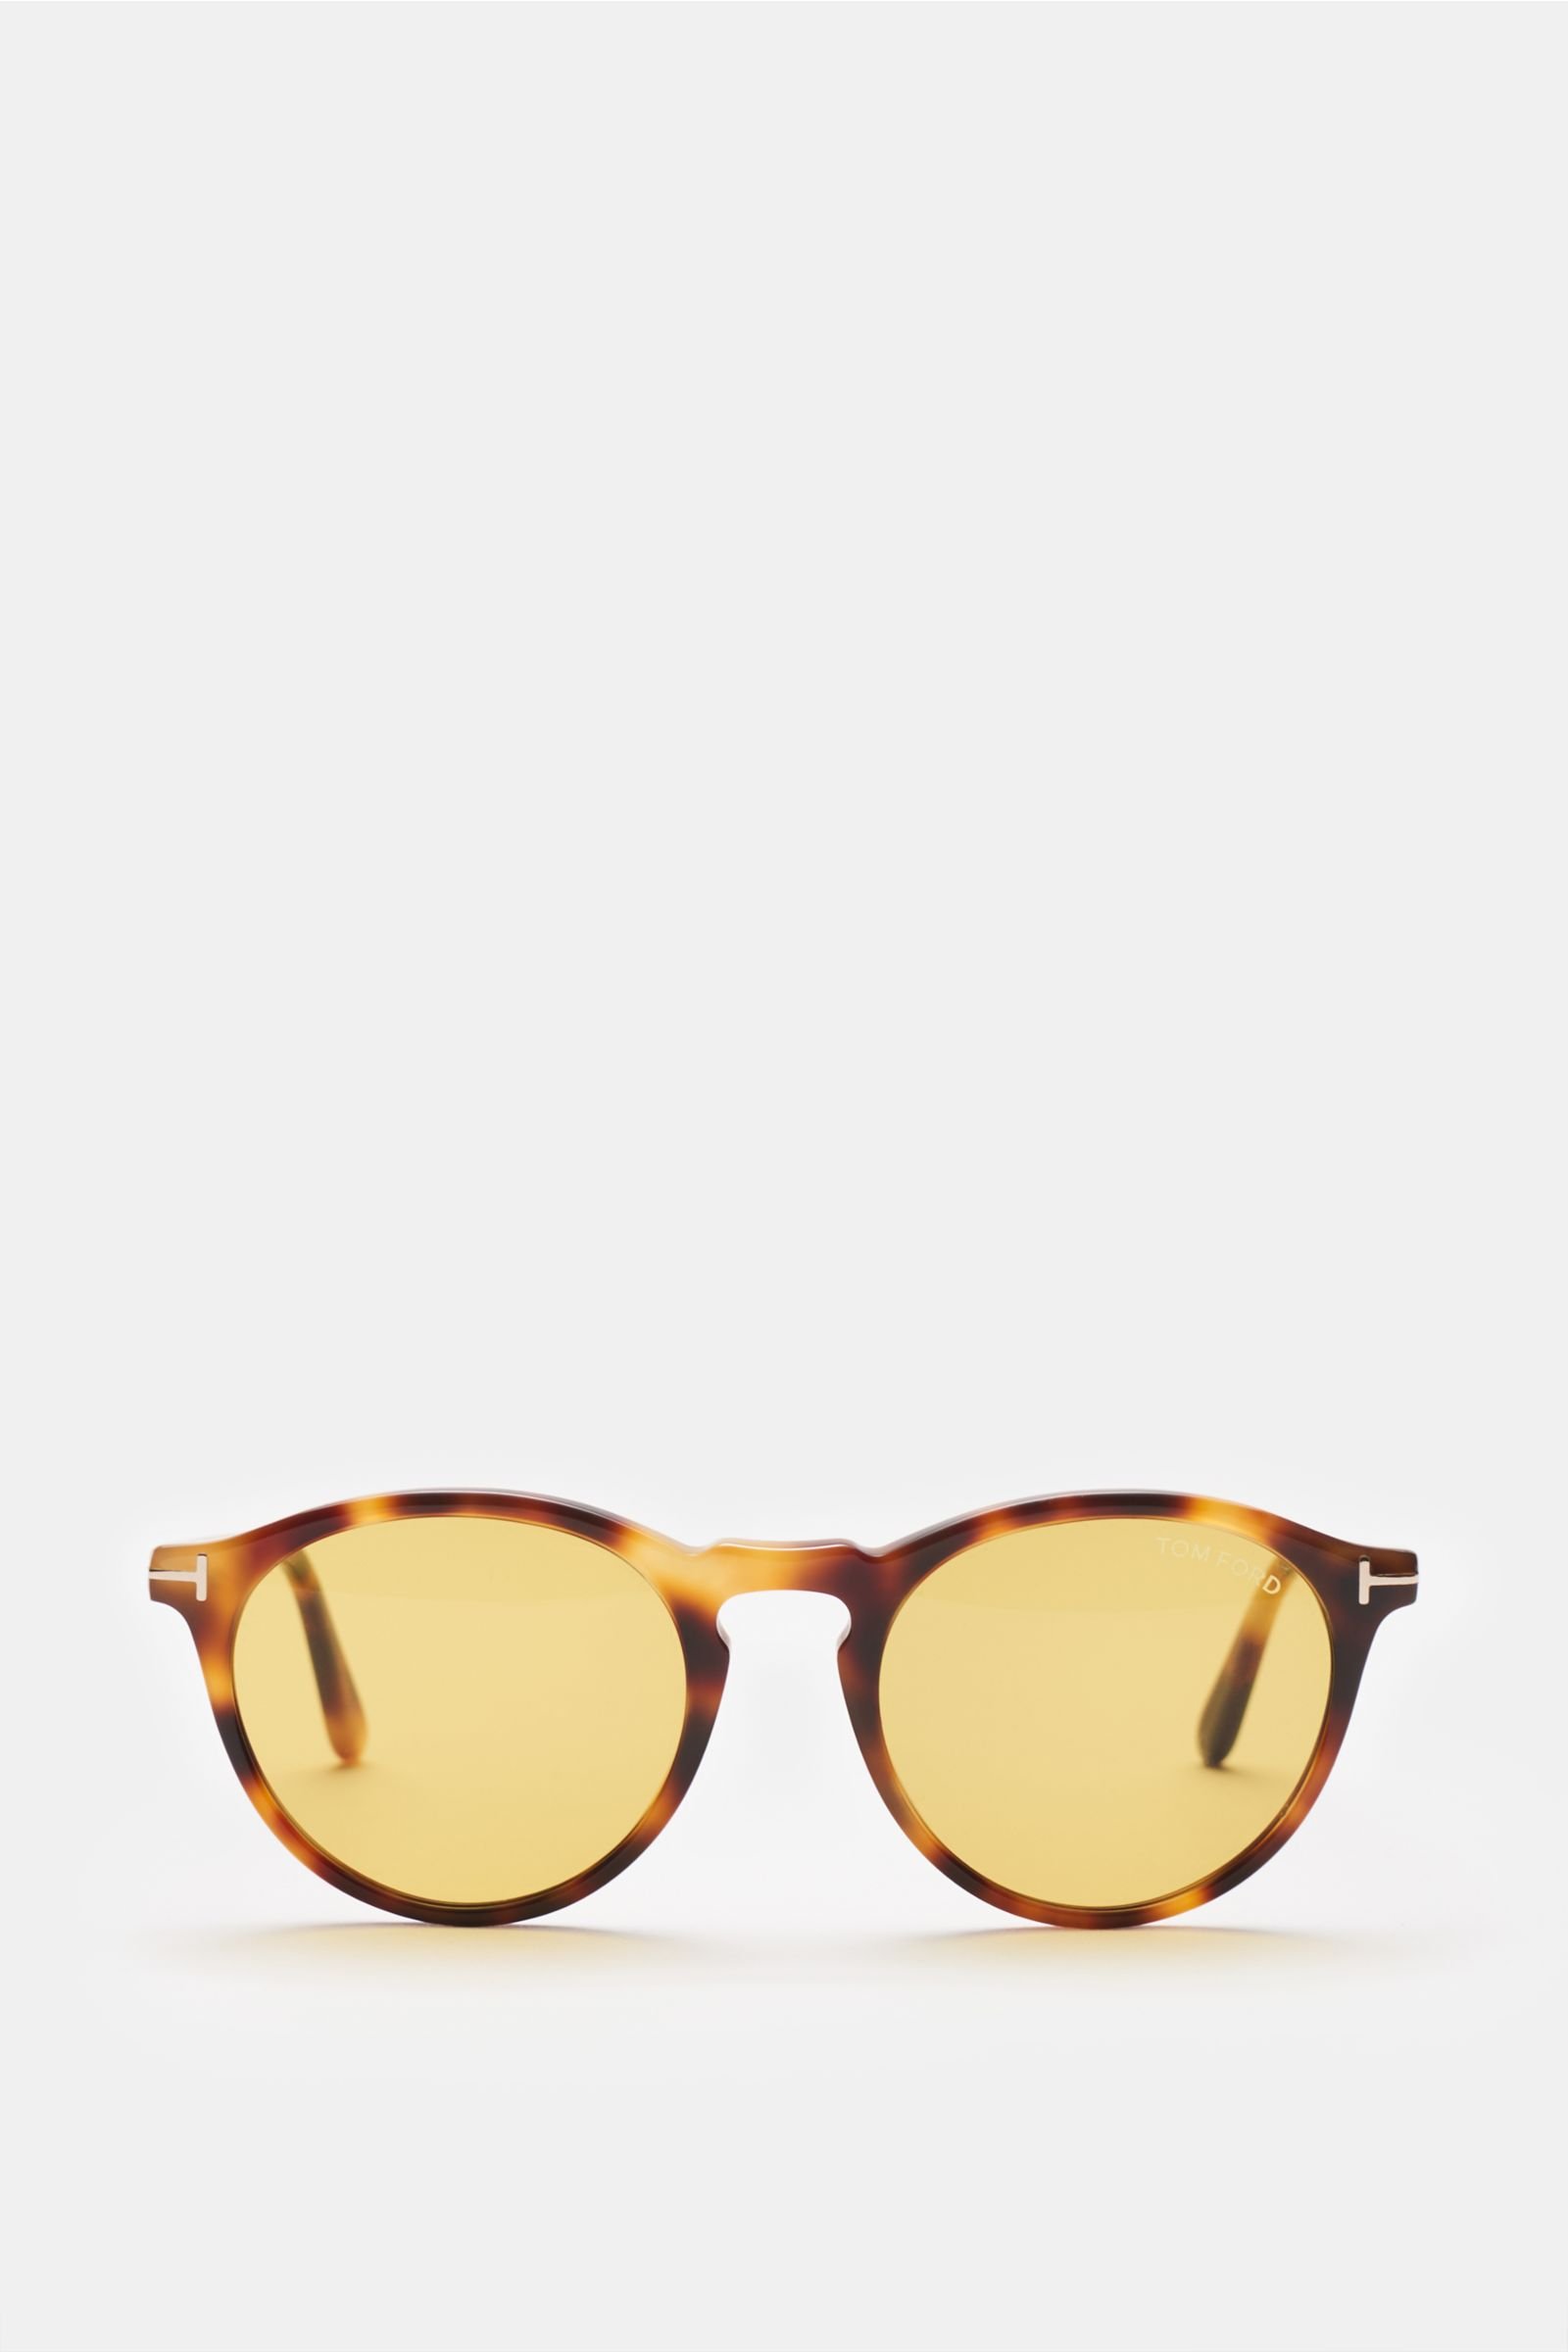 TOM FORD sunglasses 'Aurele' brown patterned/yellow | BRAUN Hamburg